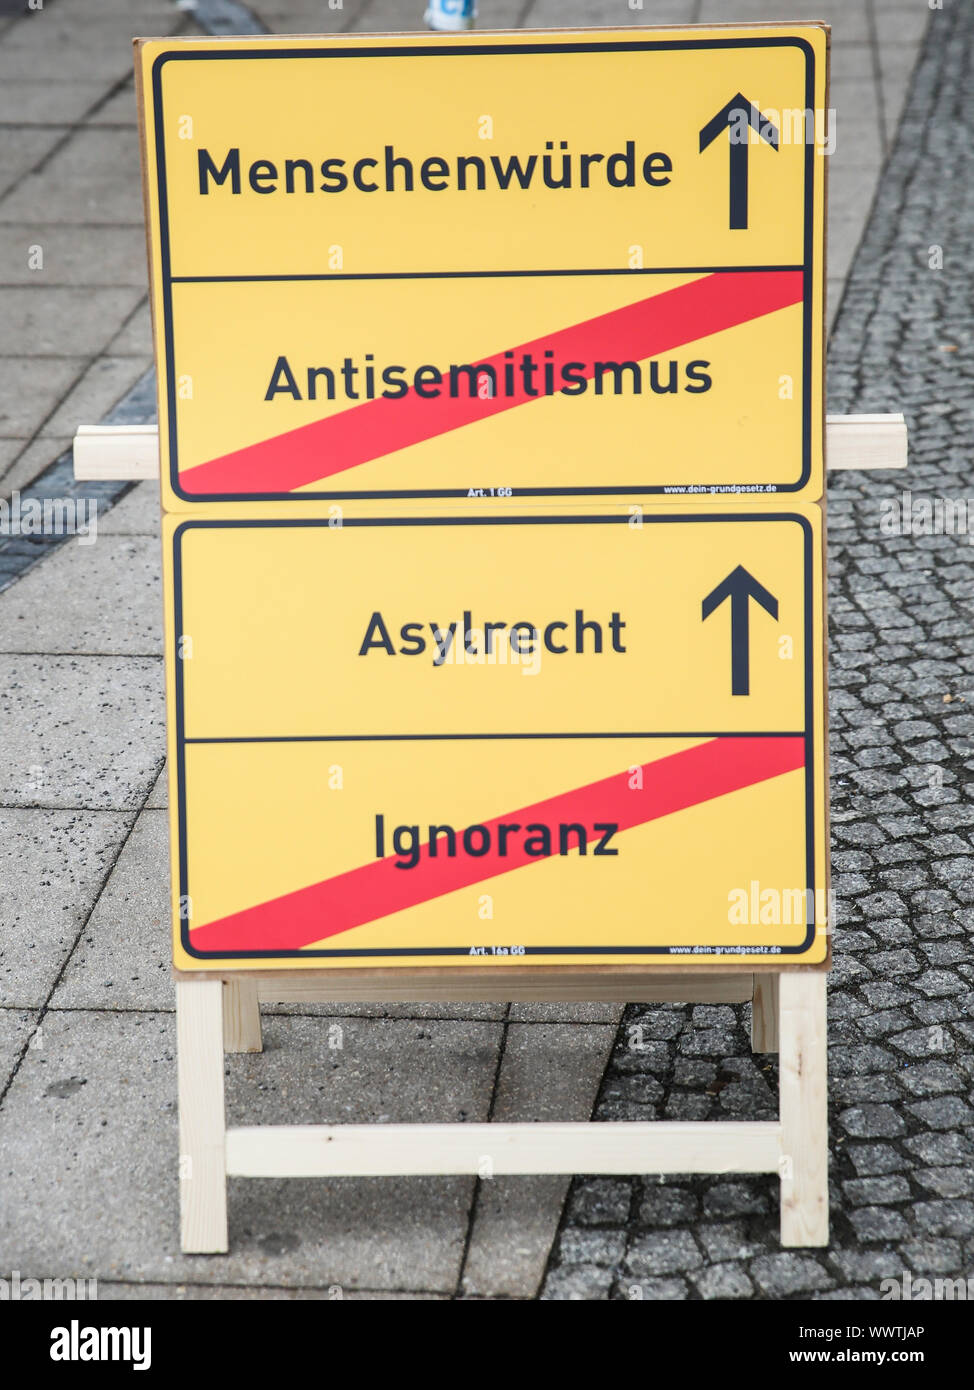 Human dignity - anti - Semitism, asylum law - ignorance Stock Photo